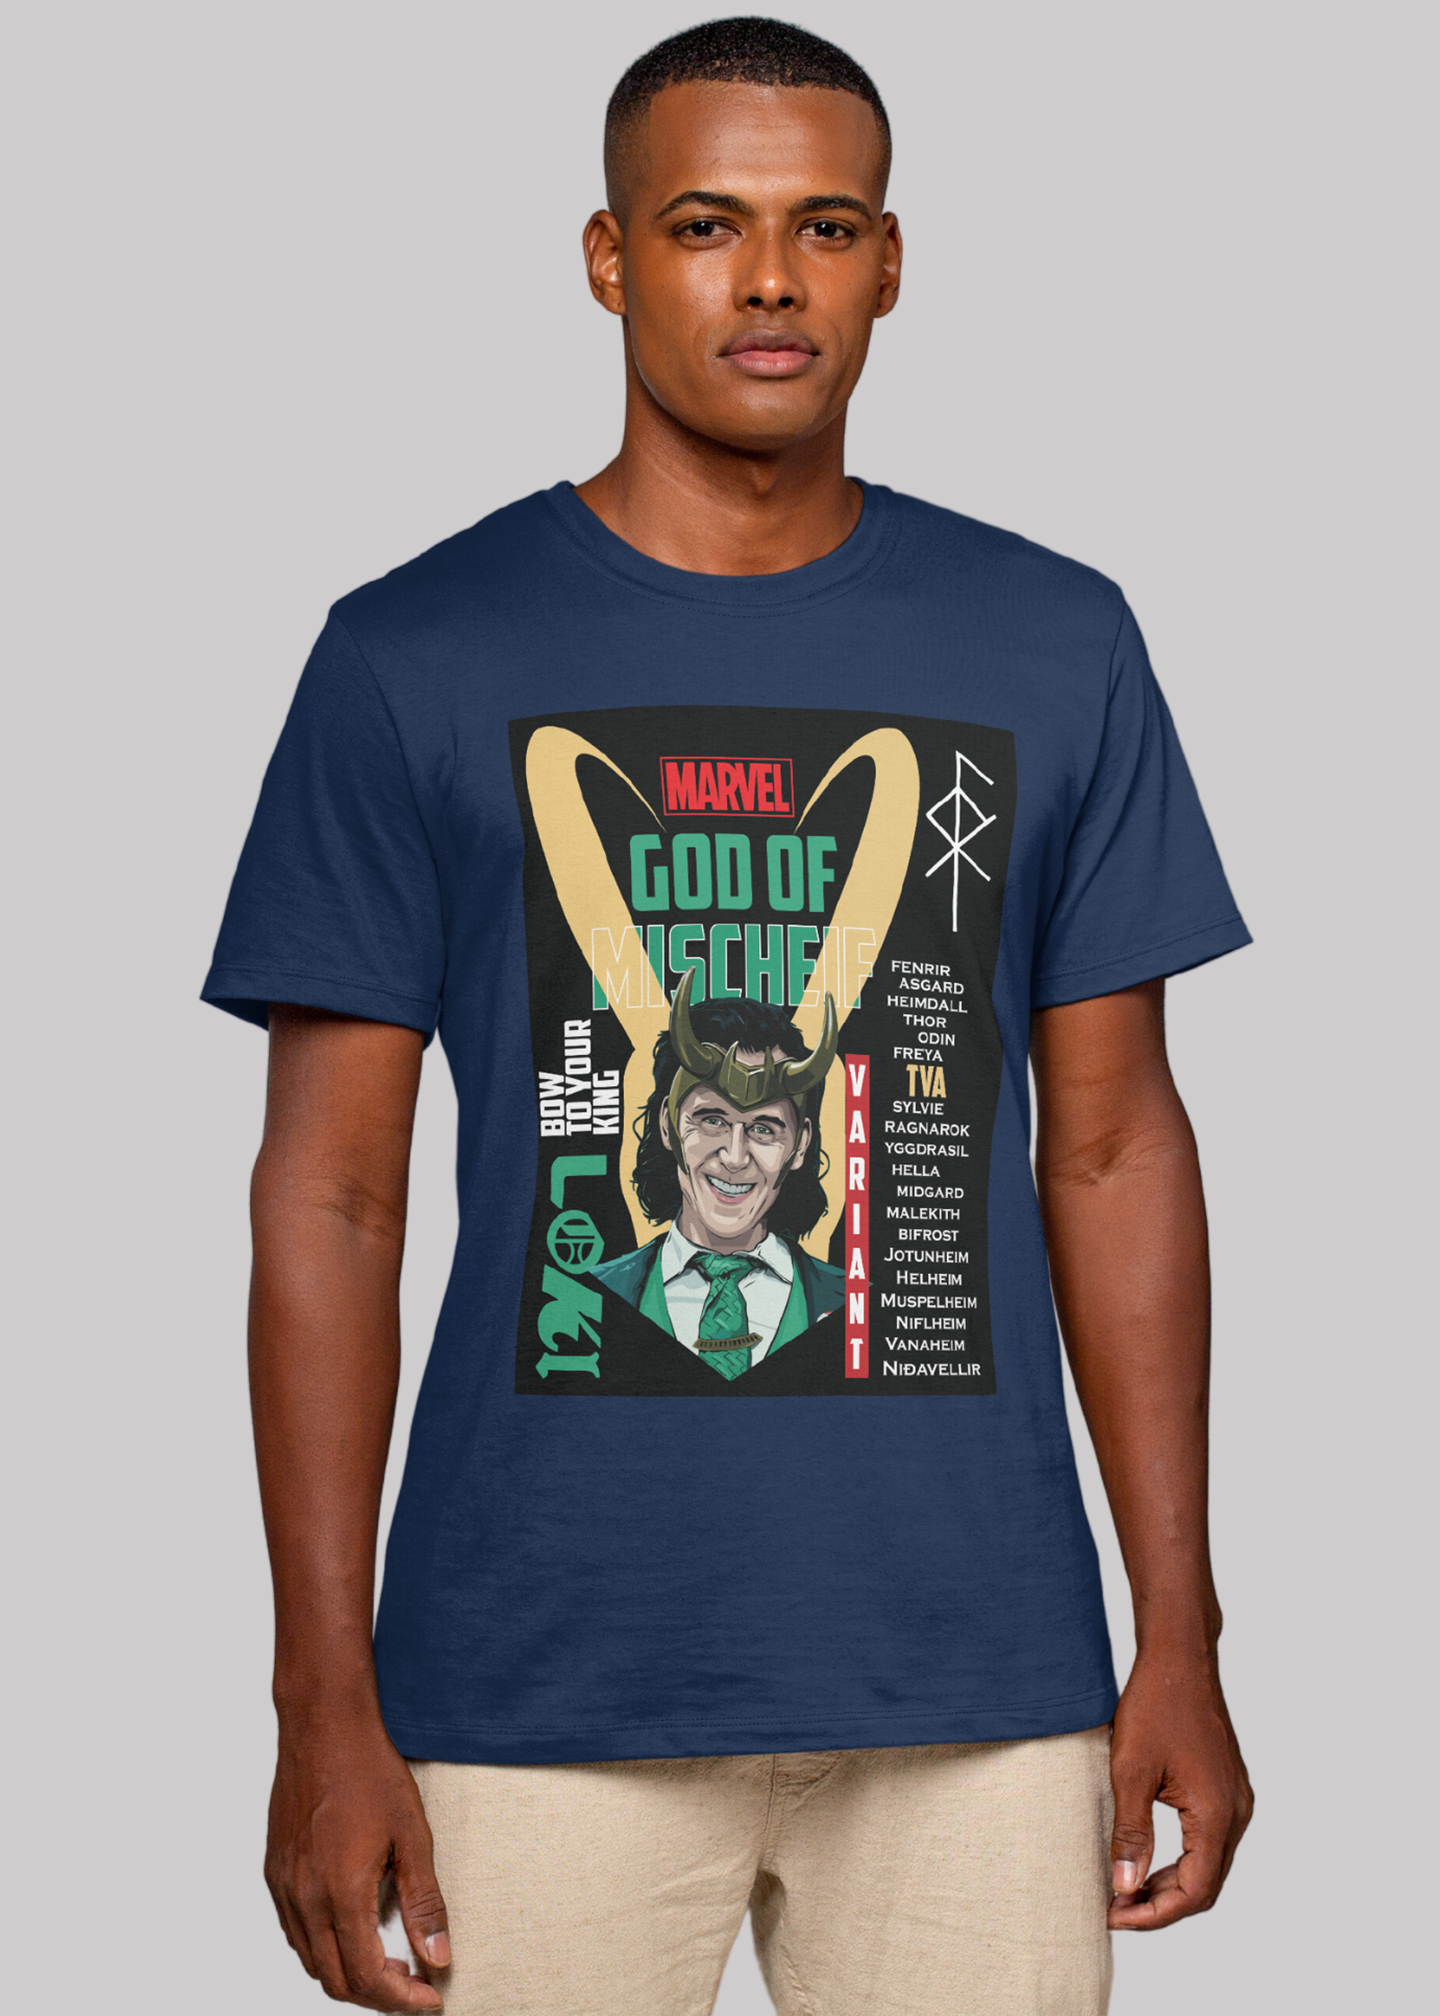 Loki Printed Half Sleeve Premium Cotton T-shirt For Men